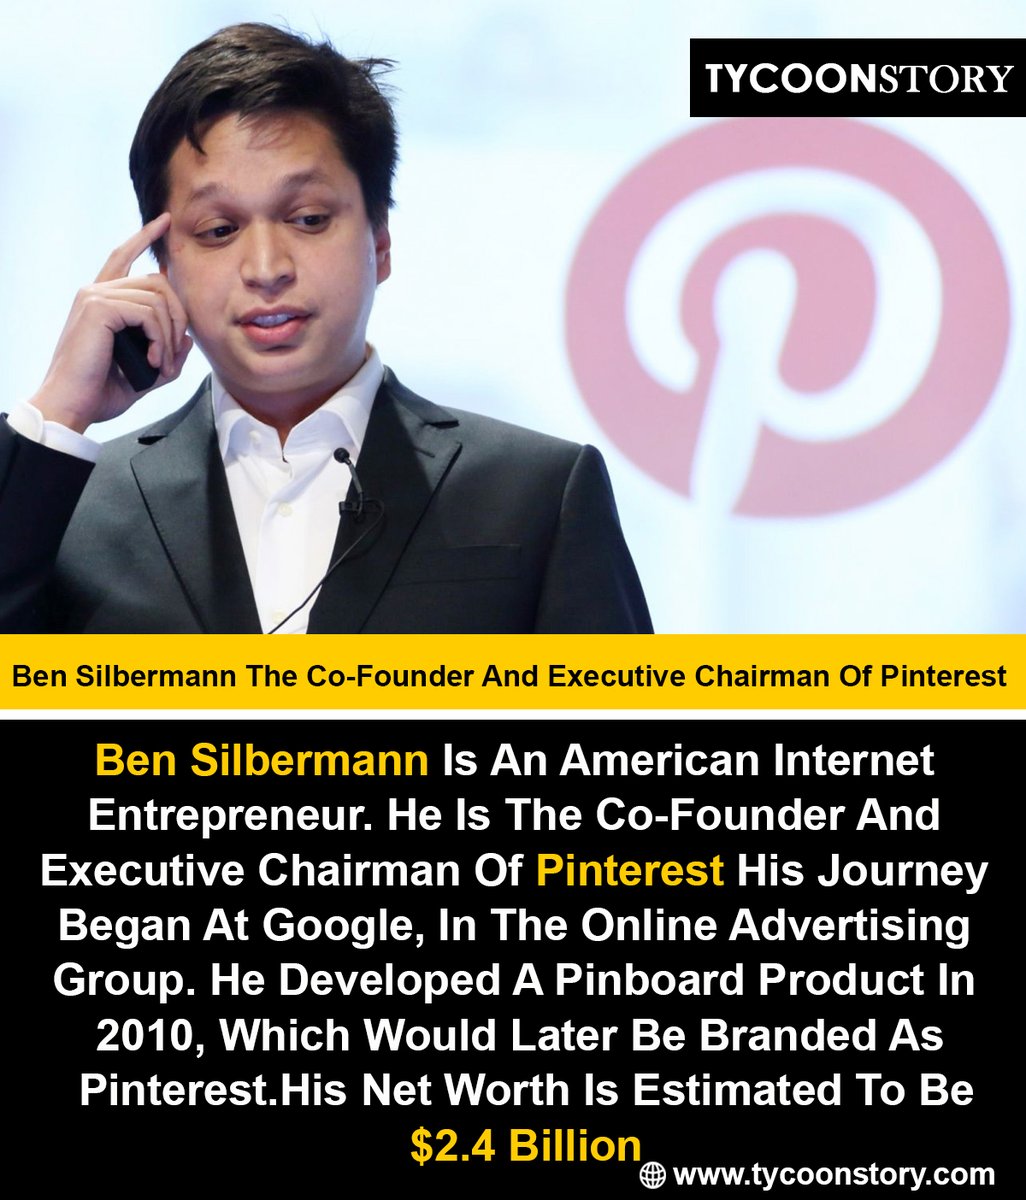 Ben Silbermann The Co-Founder And Executive Chairman Of Pinterest

#BenSilbermann #Pinterest #CoFounder #ExecutiveChairman #PinterestLeadership #TechInnovation #SocialMediaInfluence #EntrepreneurialSpirit #PinterestVisionary  #TechEntrepreneur @Pinterest 

tycoonstory.com